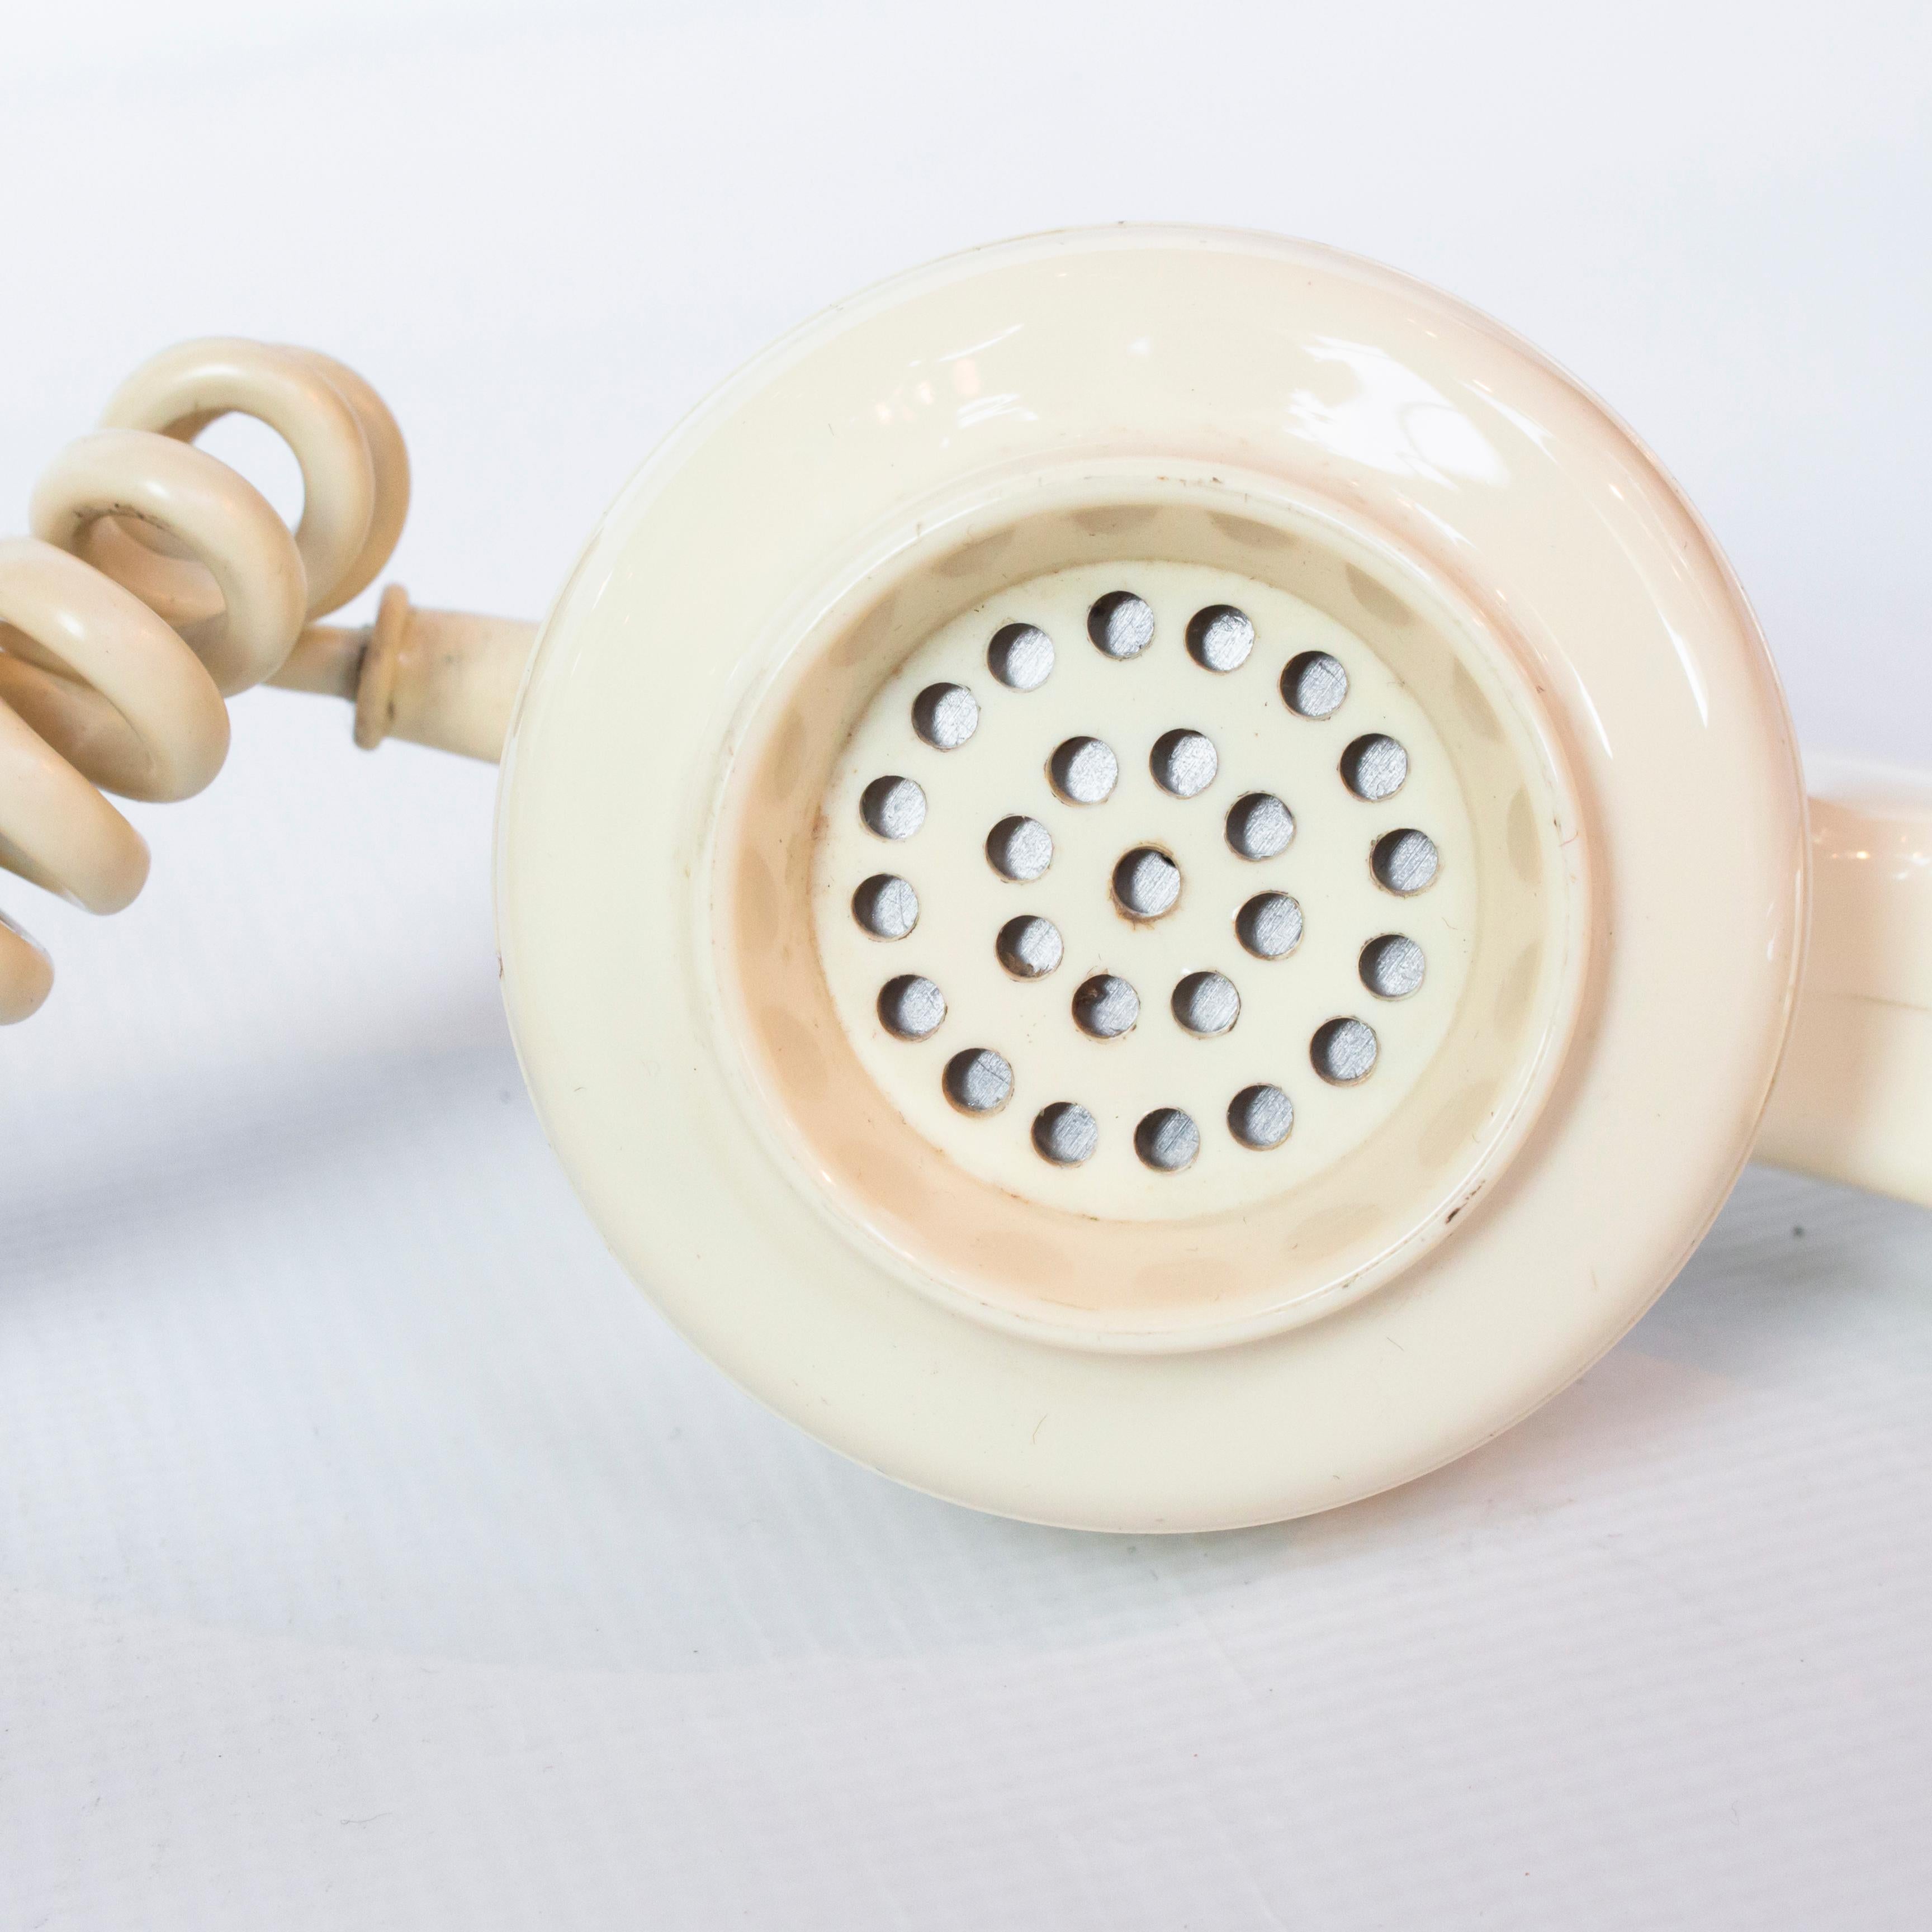 Original 1963 GPO Model 706 Telephone in Ivory, Original Nylon Carrying Strap 2